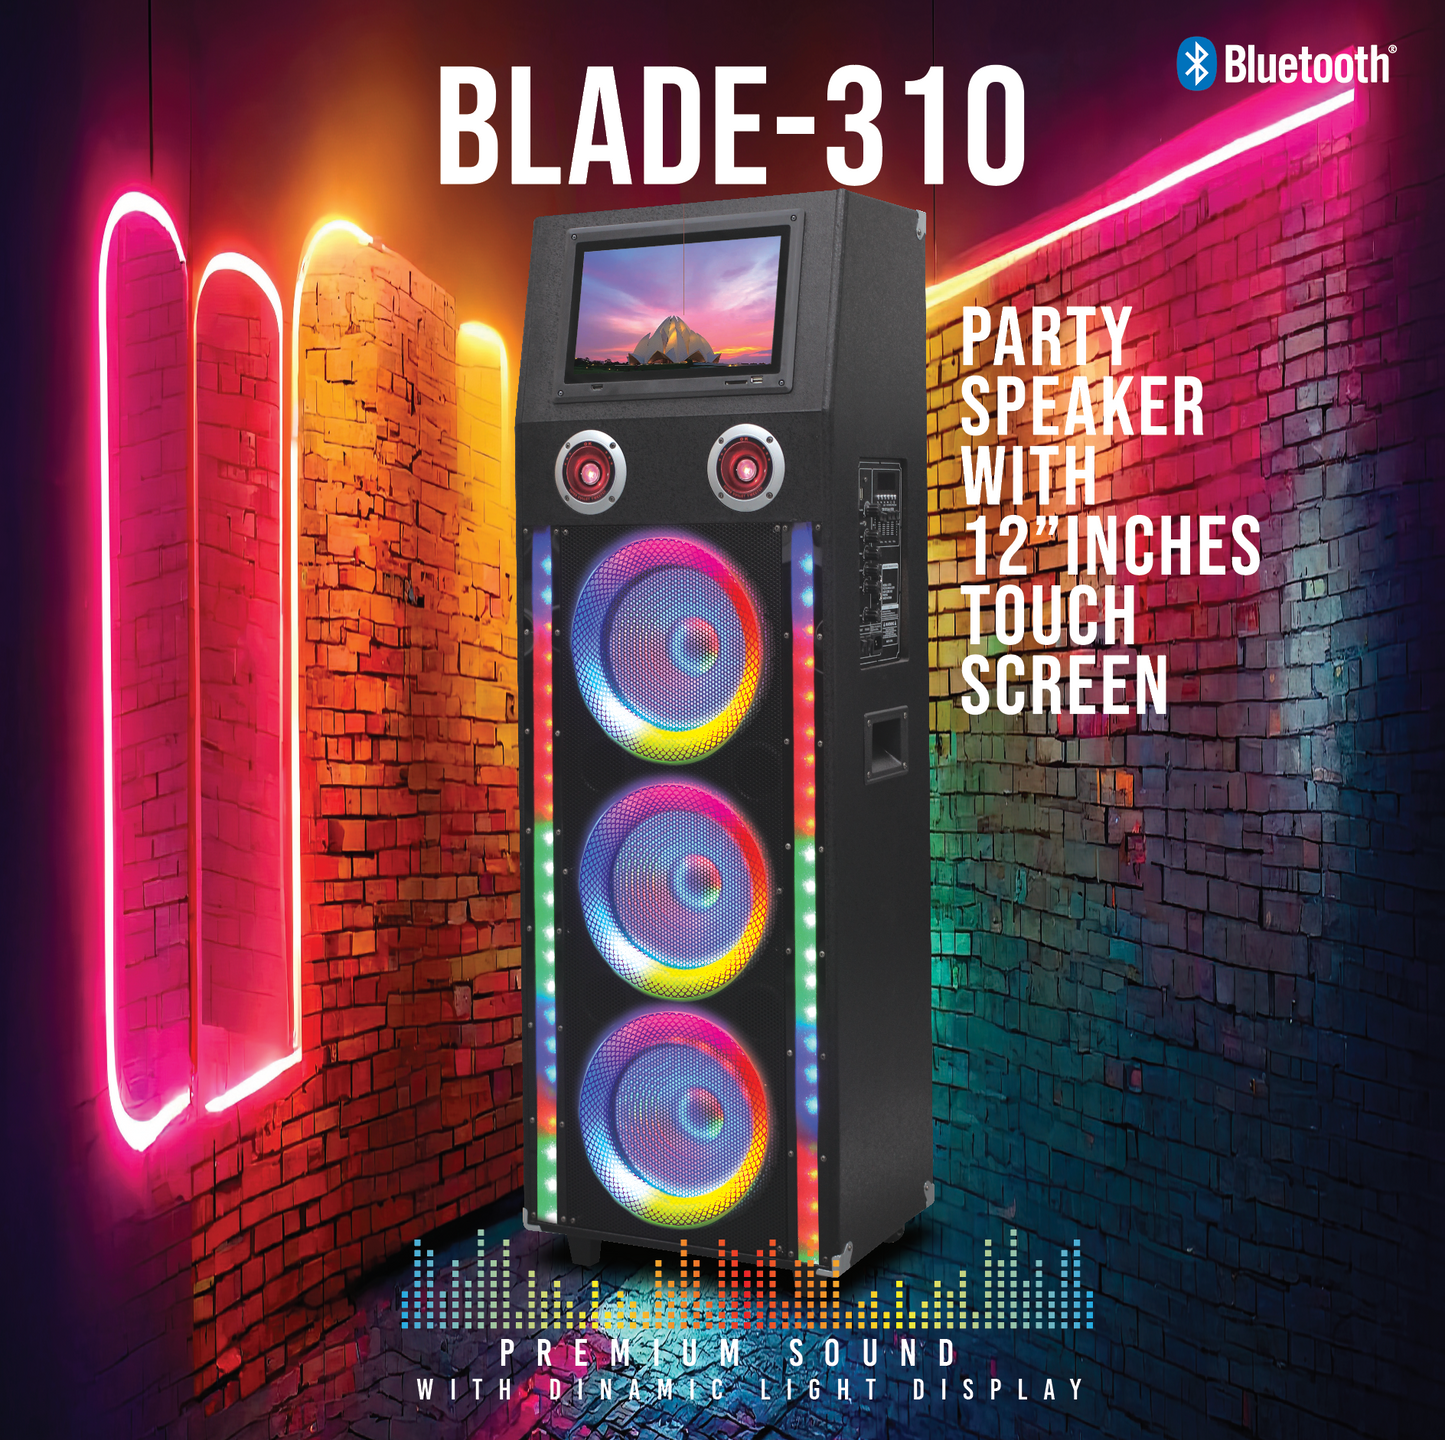 Blade-310 Party Speaker